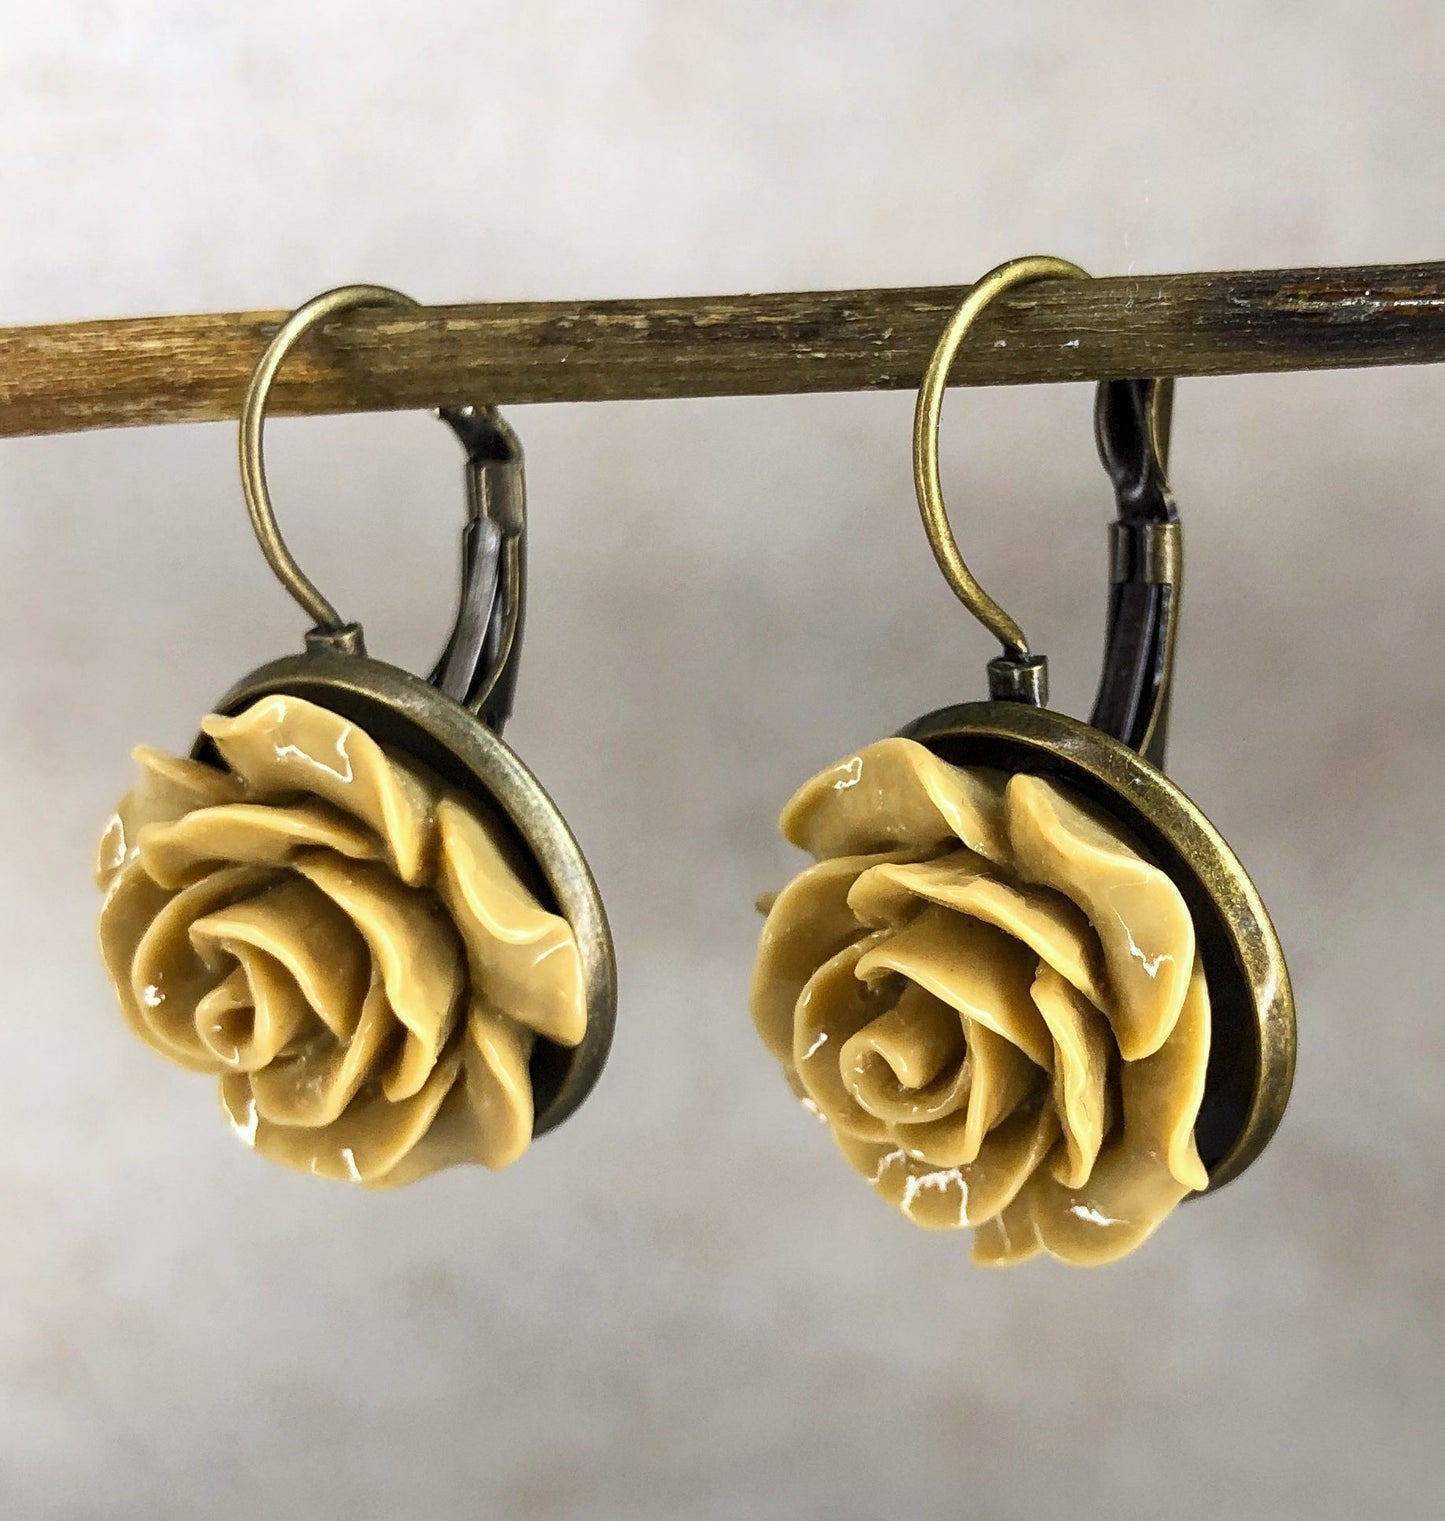 Autumns bronze earrings in vintage style